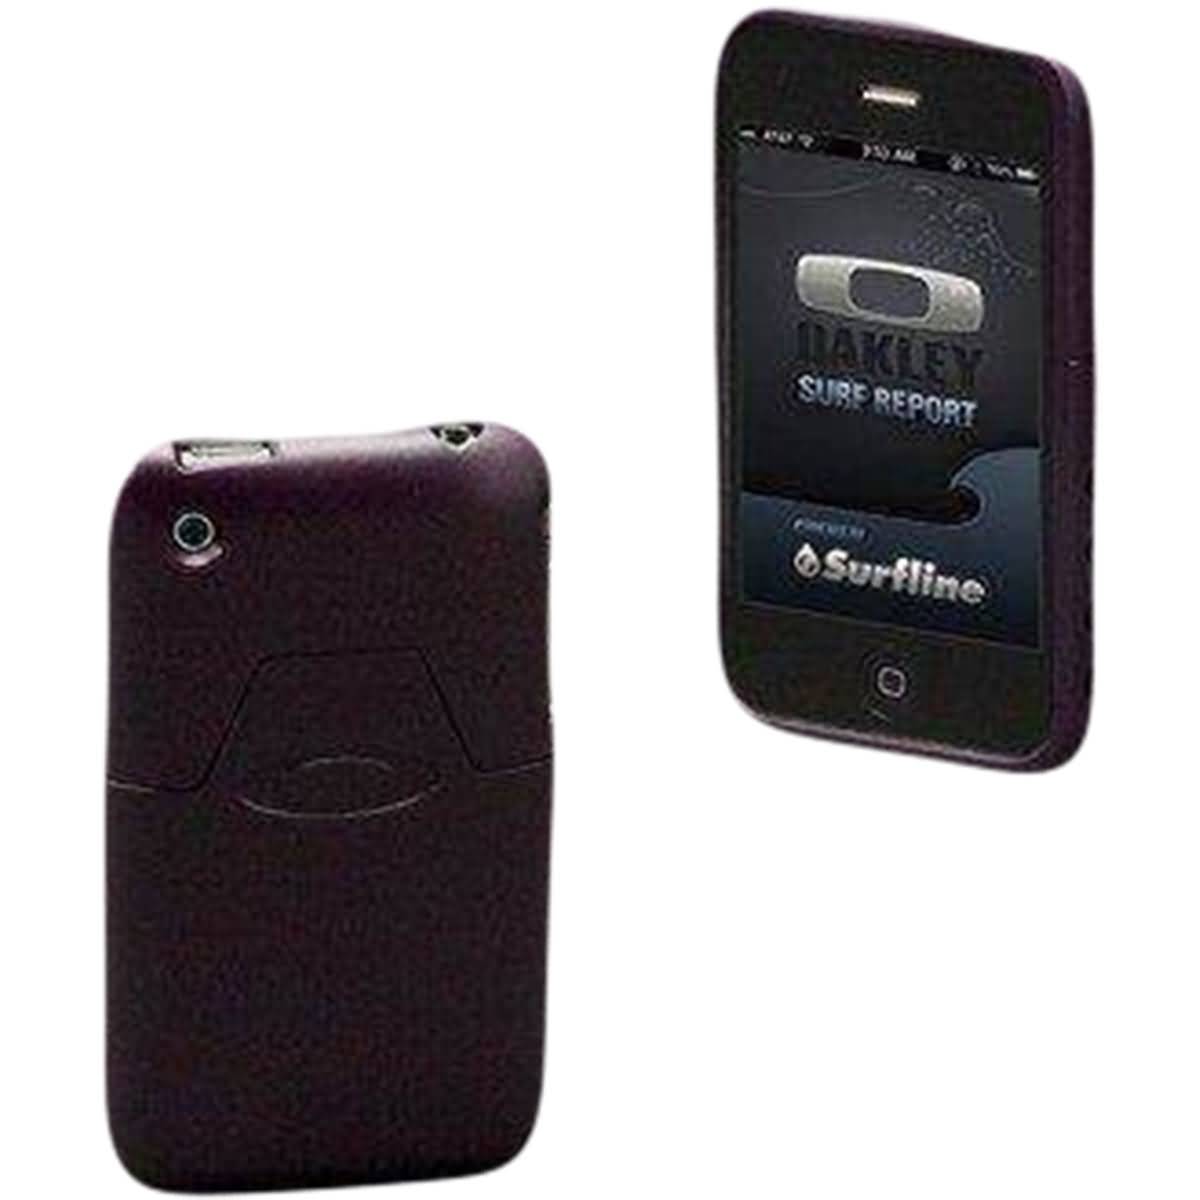 Oakley Iphone 3GS O Matter Case Phone Accessories-89034